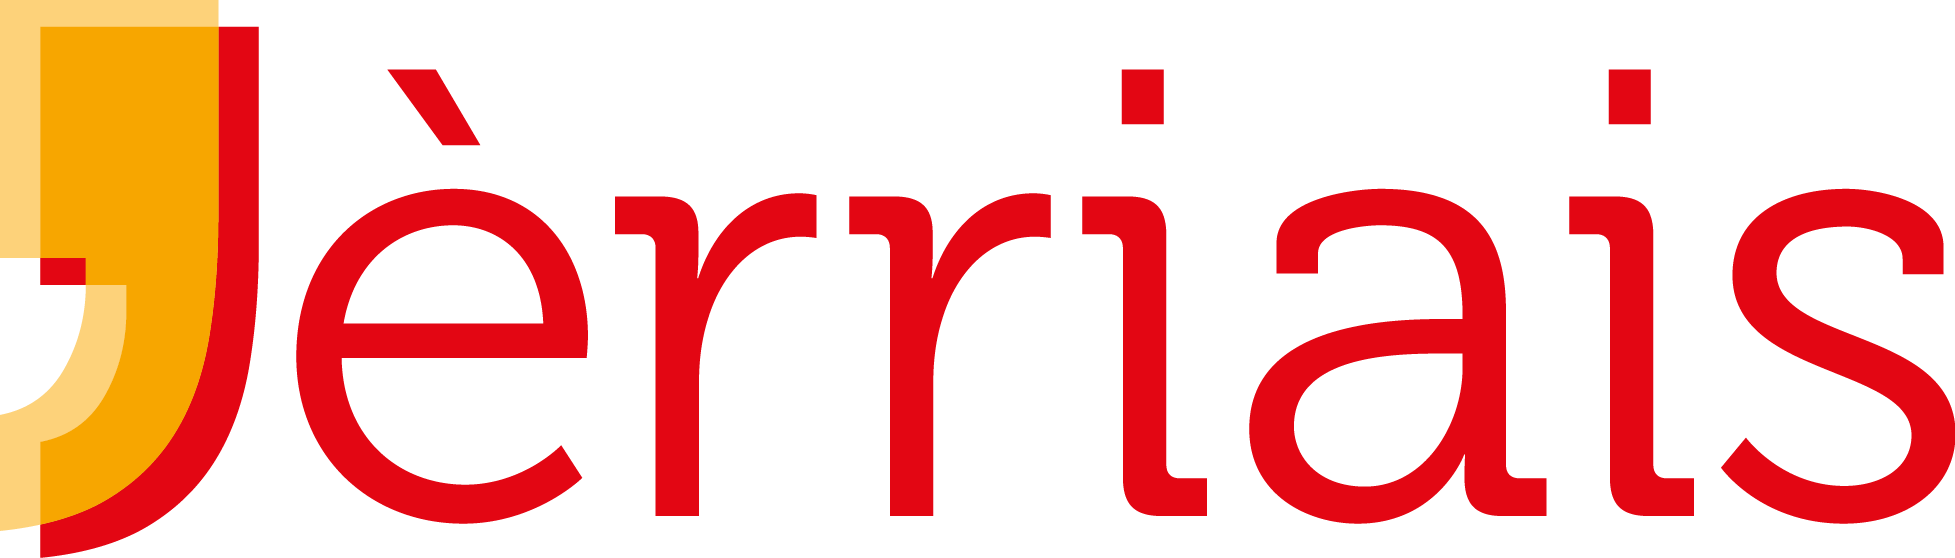 Jèrriais Logo with Cow